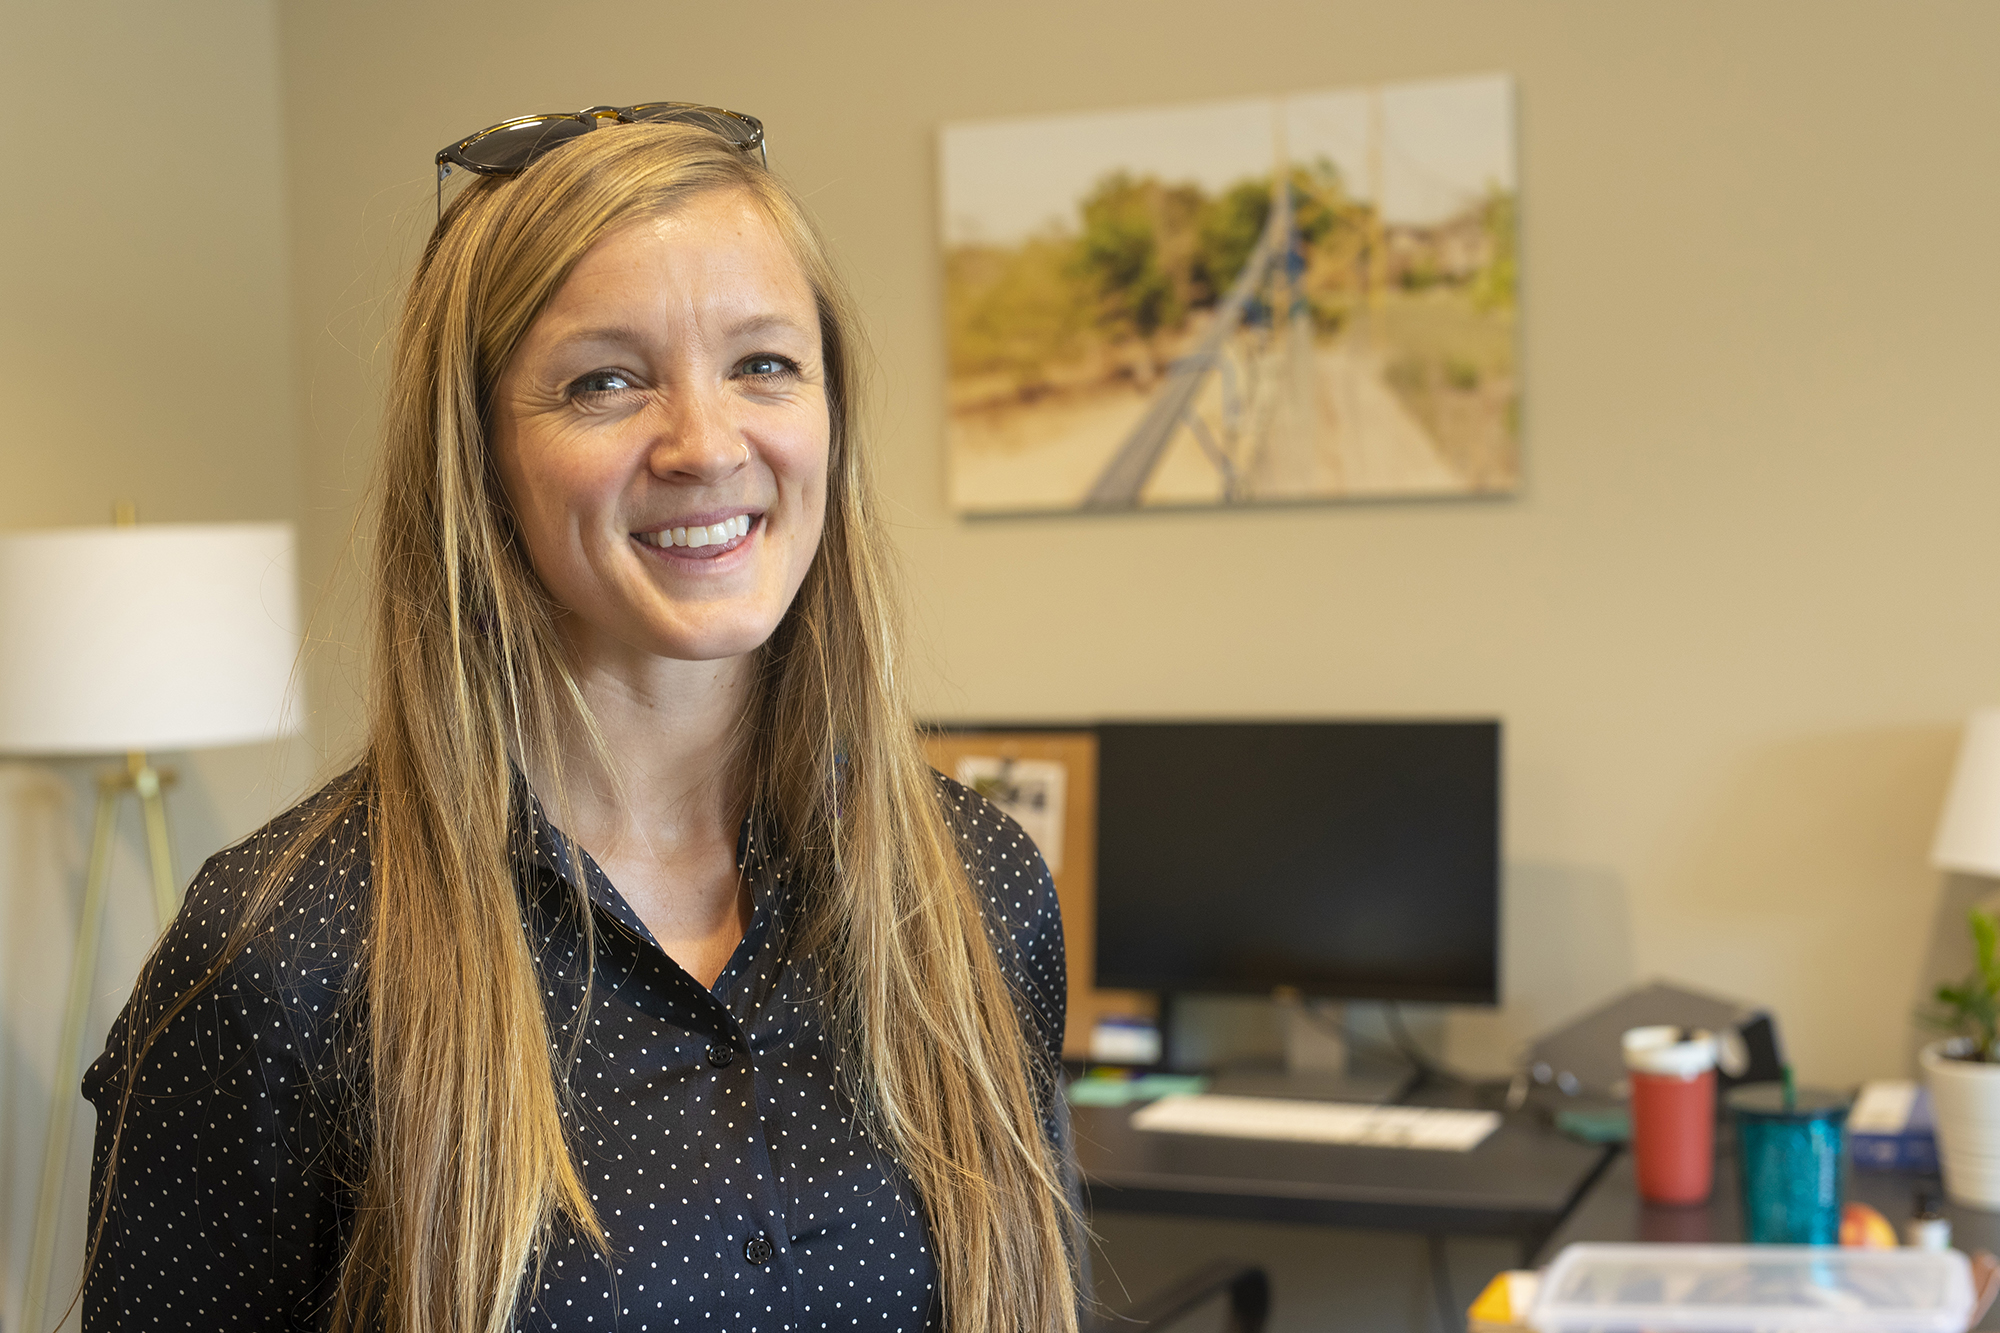 University of Iowa alumna Avery Bang is the CEO of Bridges to Prosperity